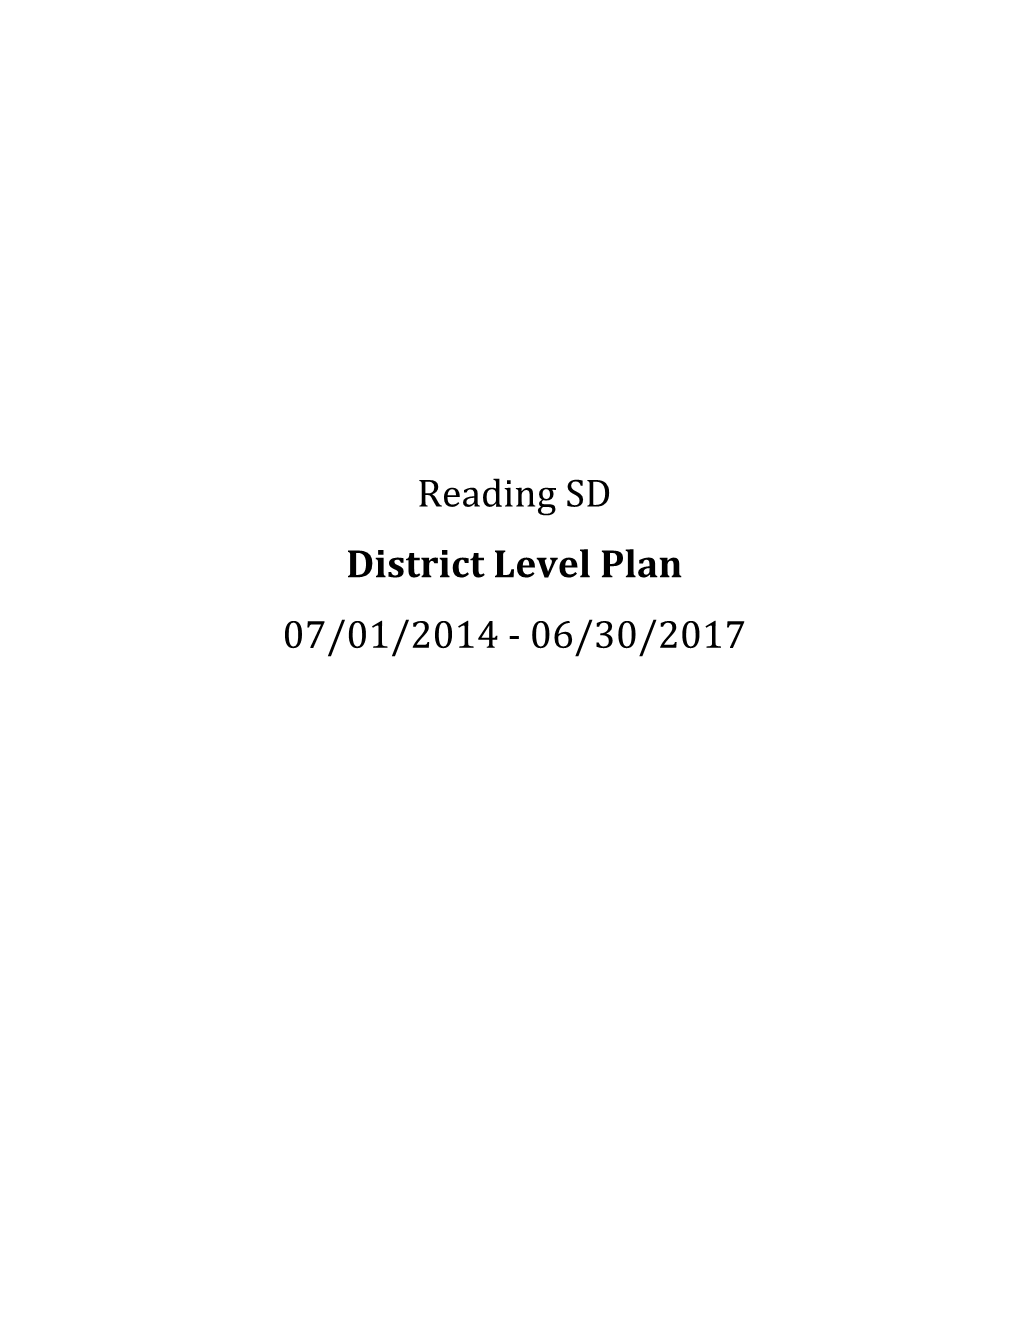 Reading School District Plan 2014-2017